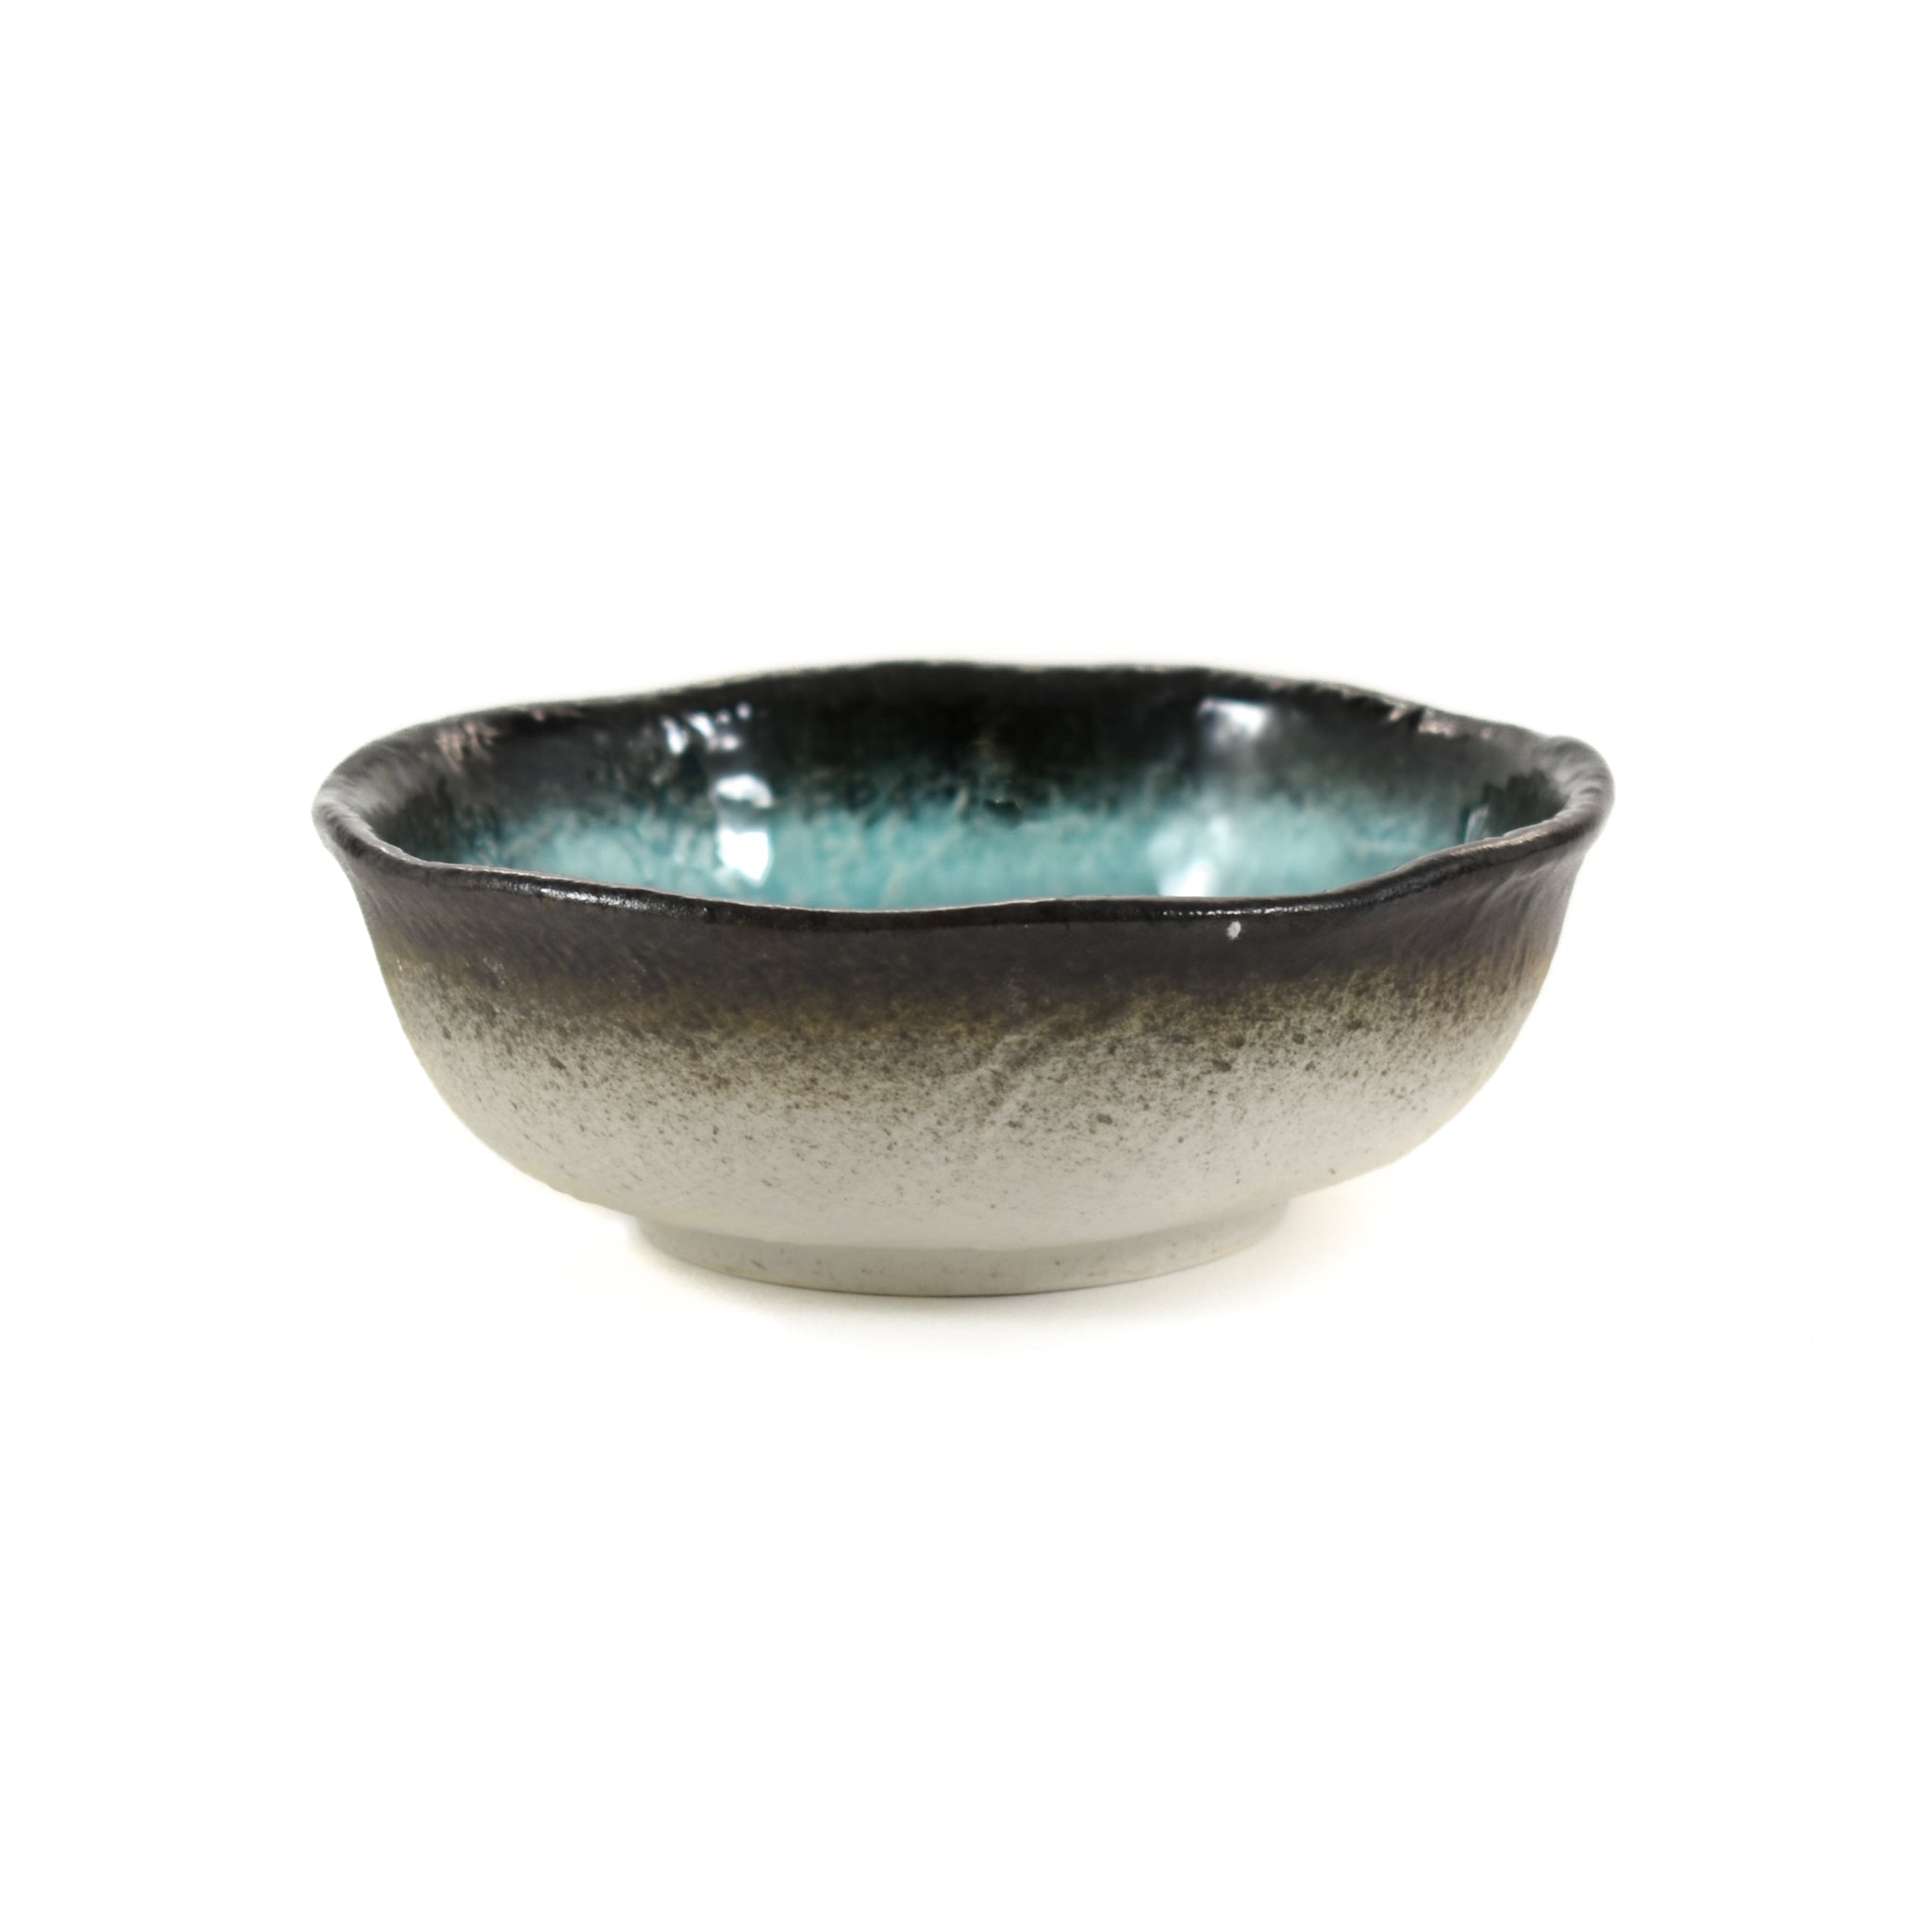 Turquoise Glaze Bowl, 12cm dia x 4cm high